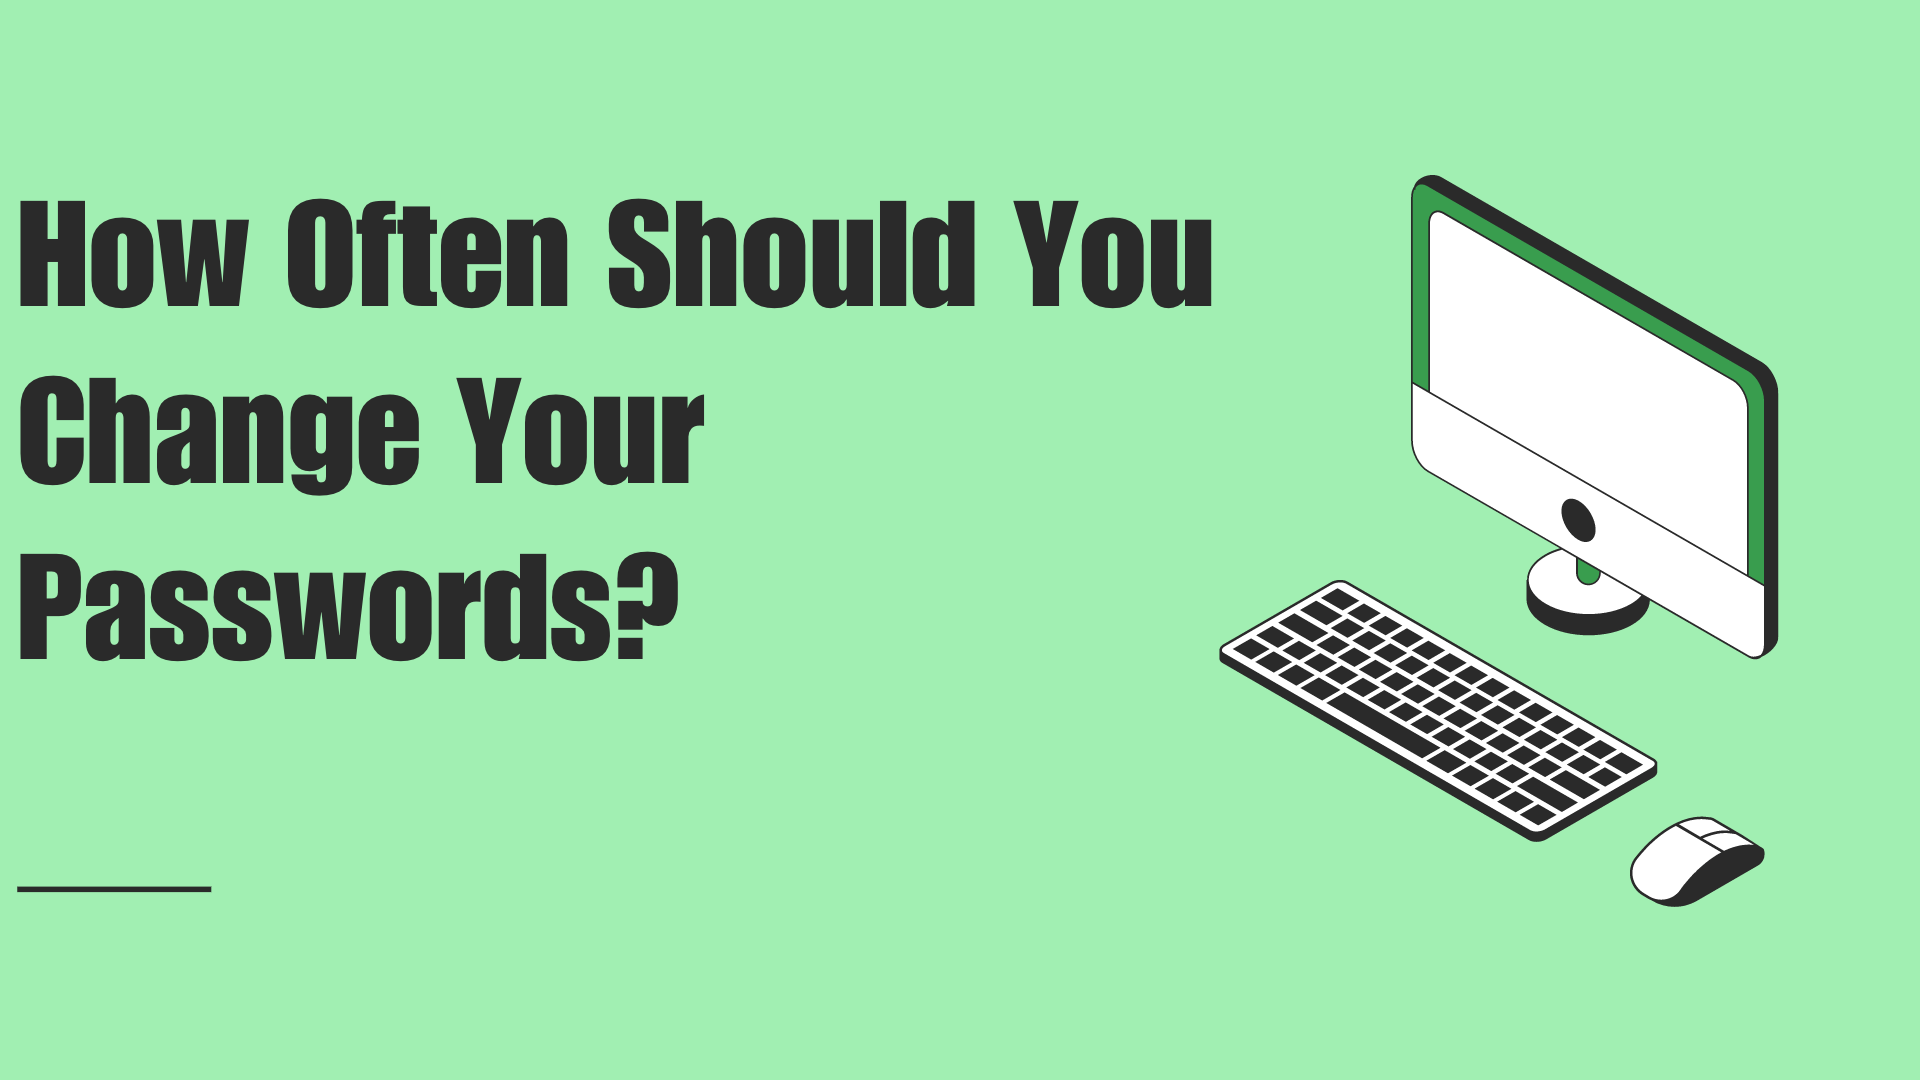 How Often Should You Change Your Passwords?